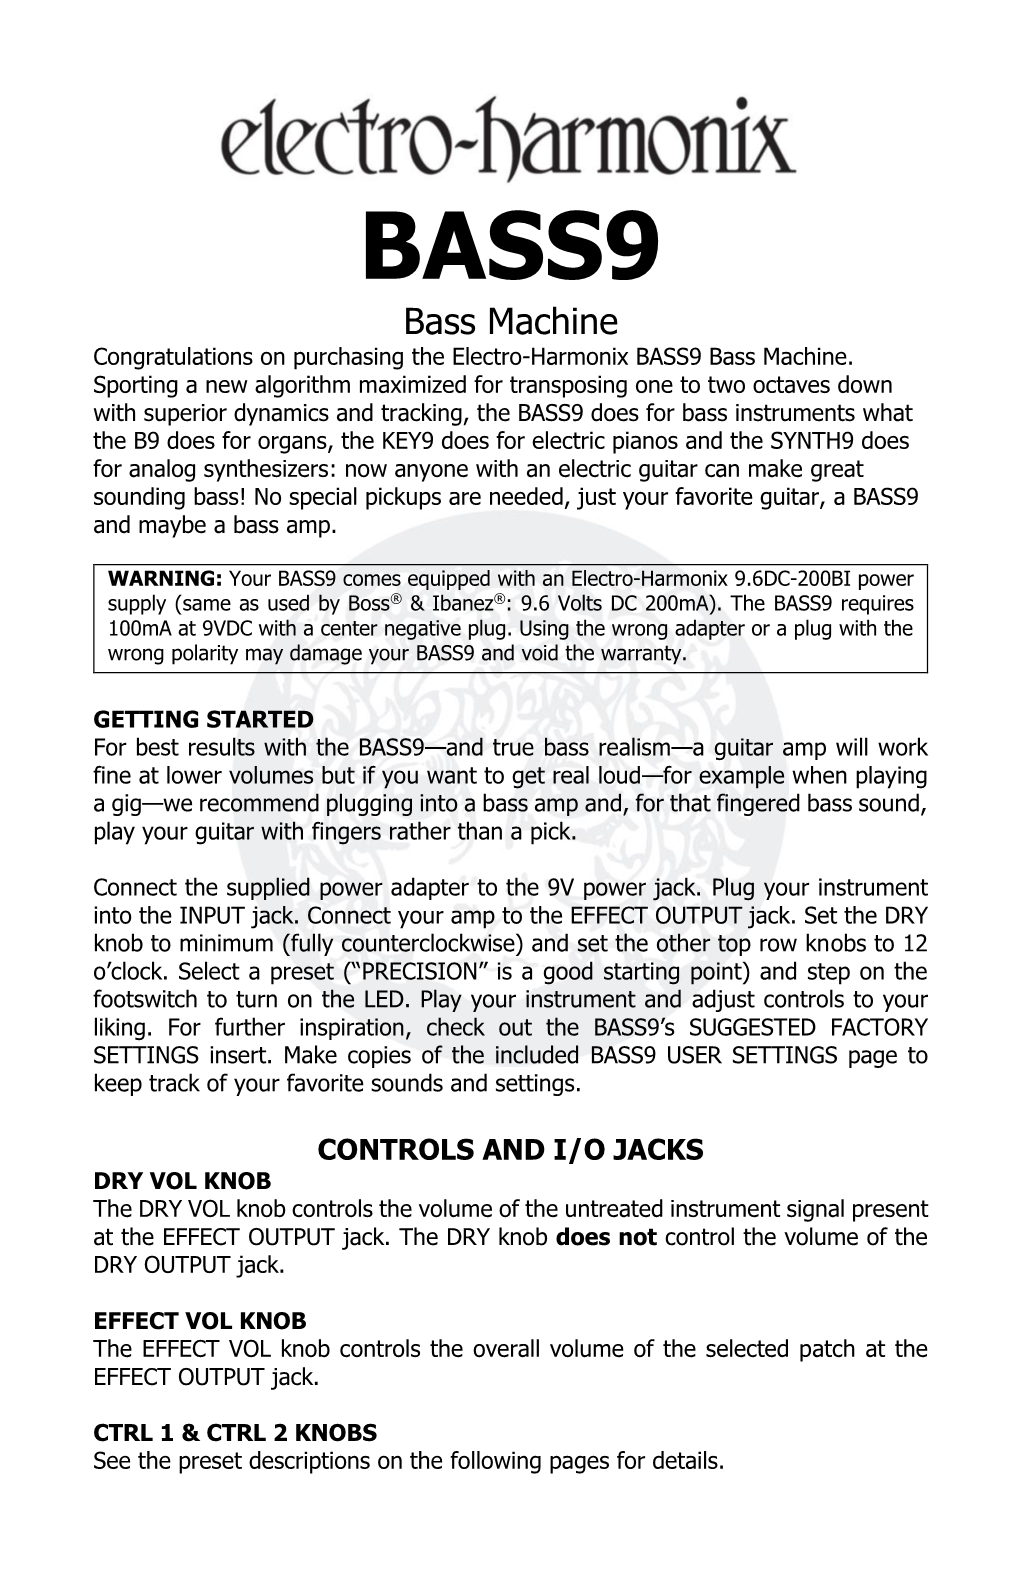 BASS9 Bass Machine Congratulations on Purchasing the Electro-Harmonix BASS9 Bass Machine